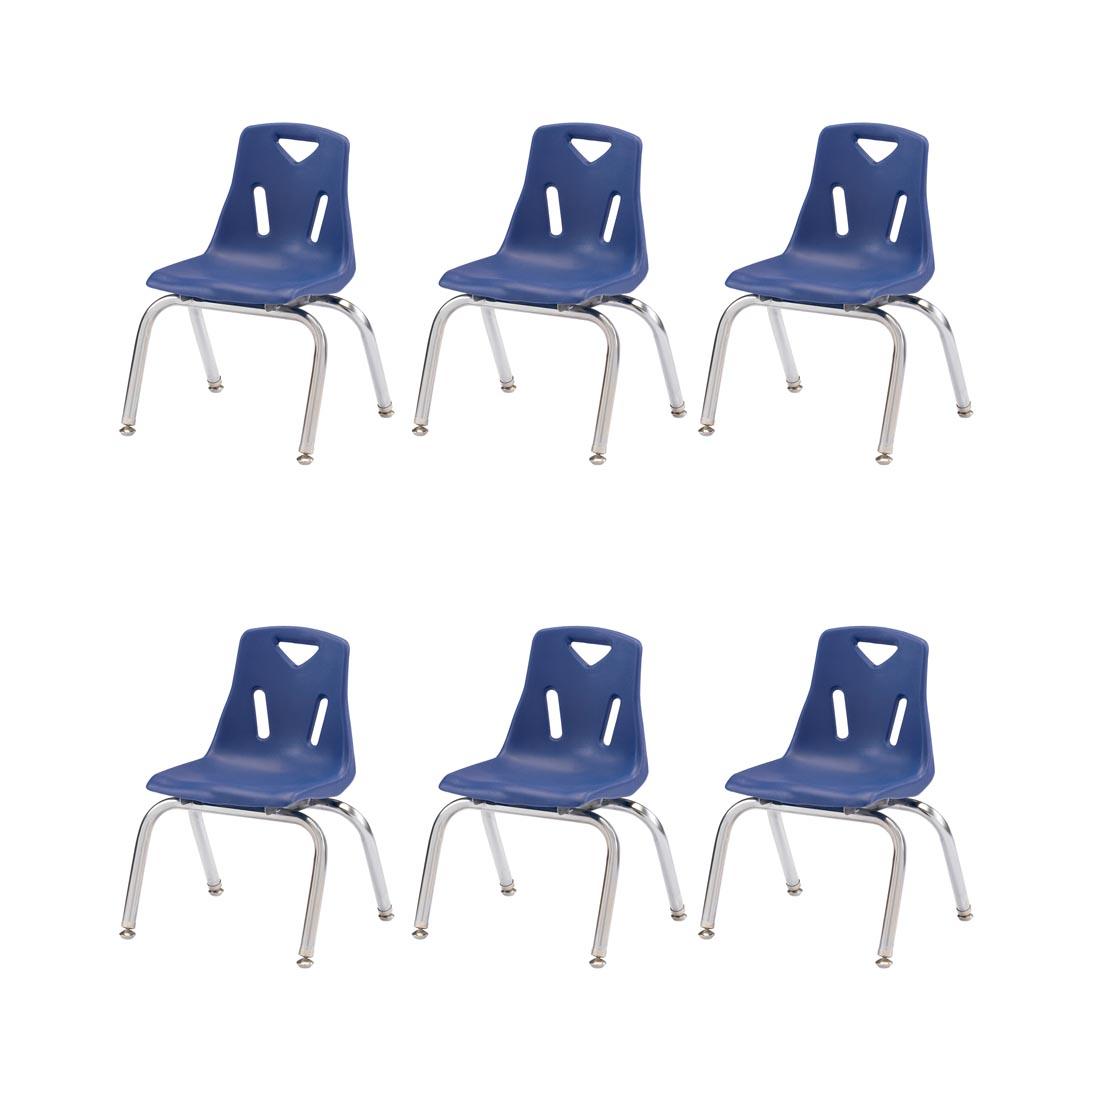 Six Blue Berries Plastic Chairs